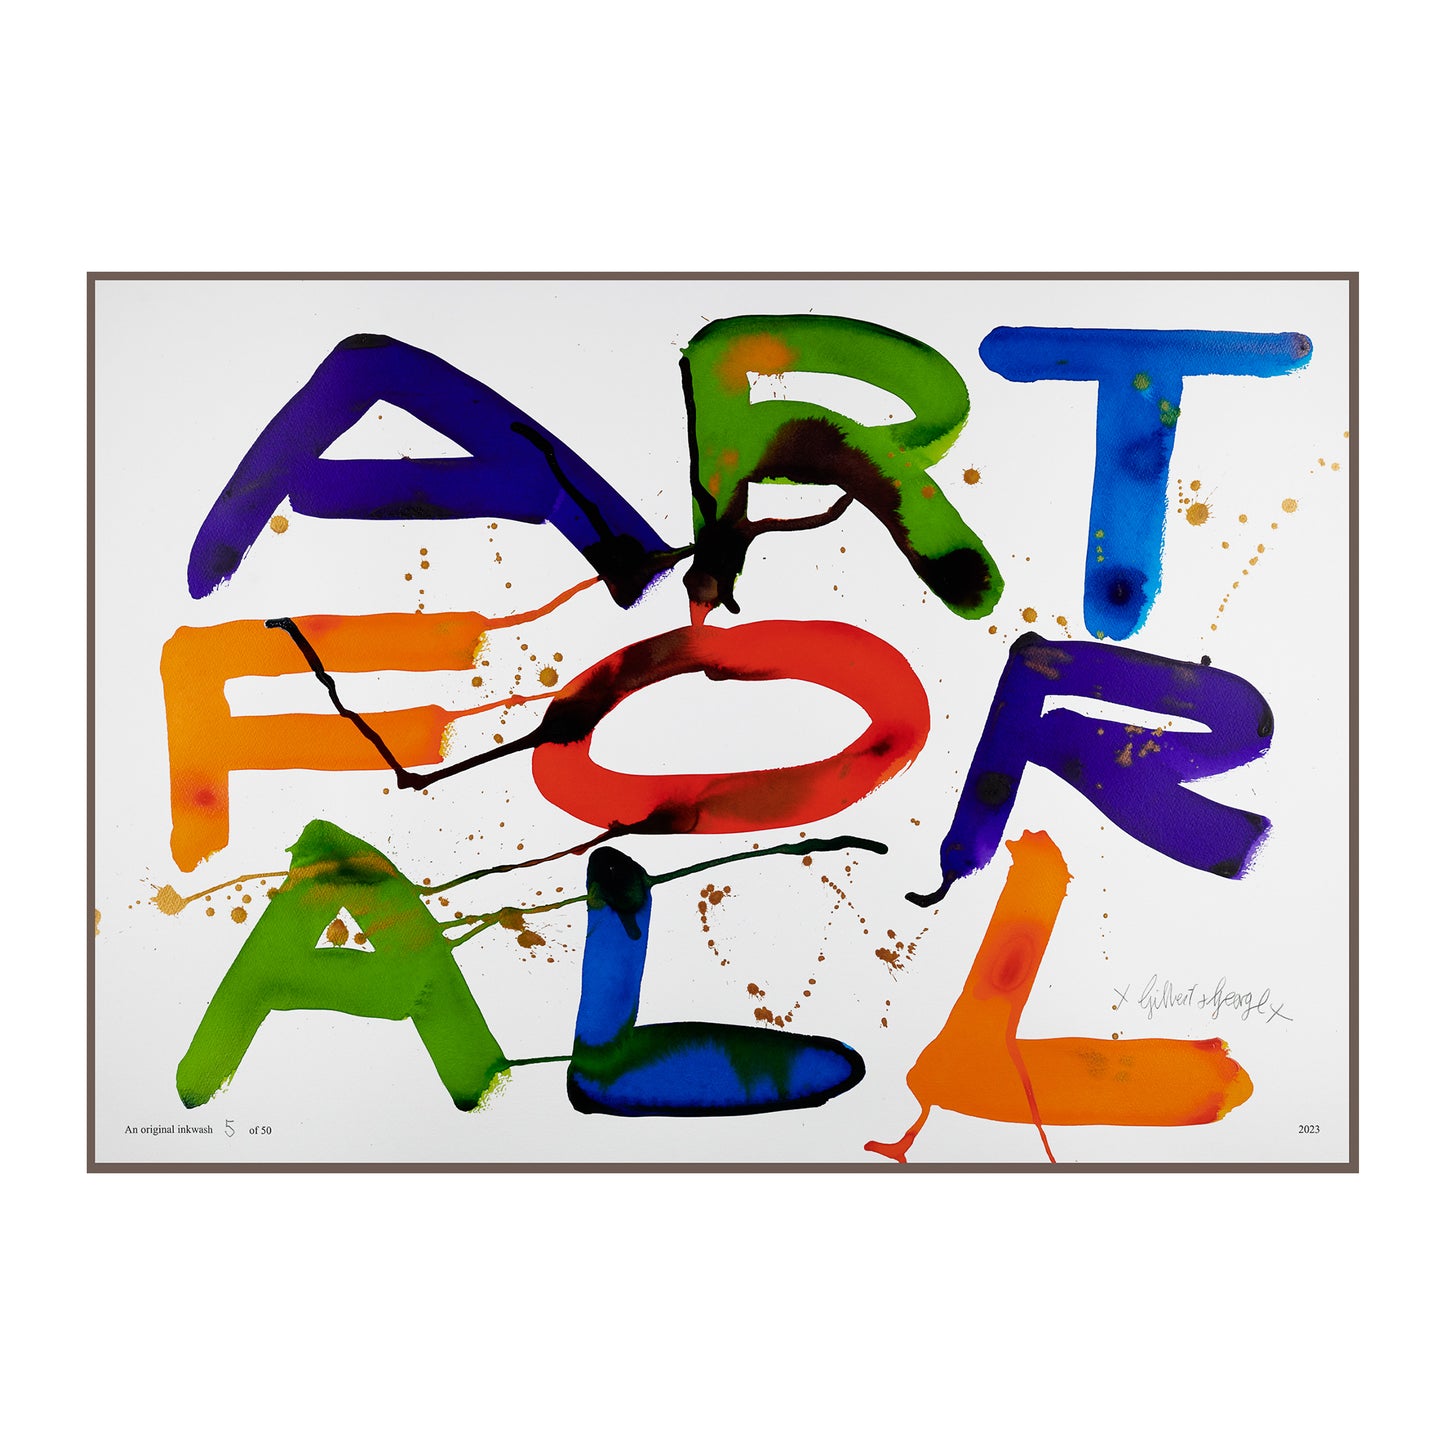 ART FOR ALL (h)